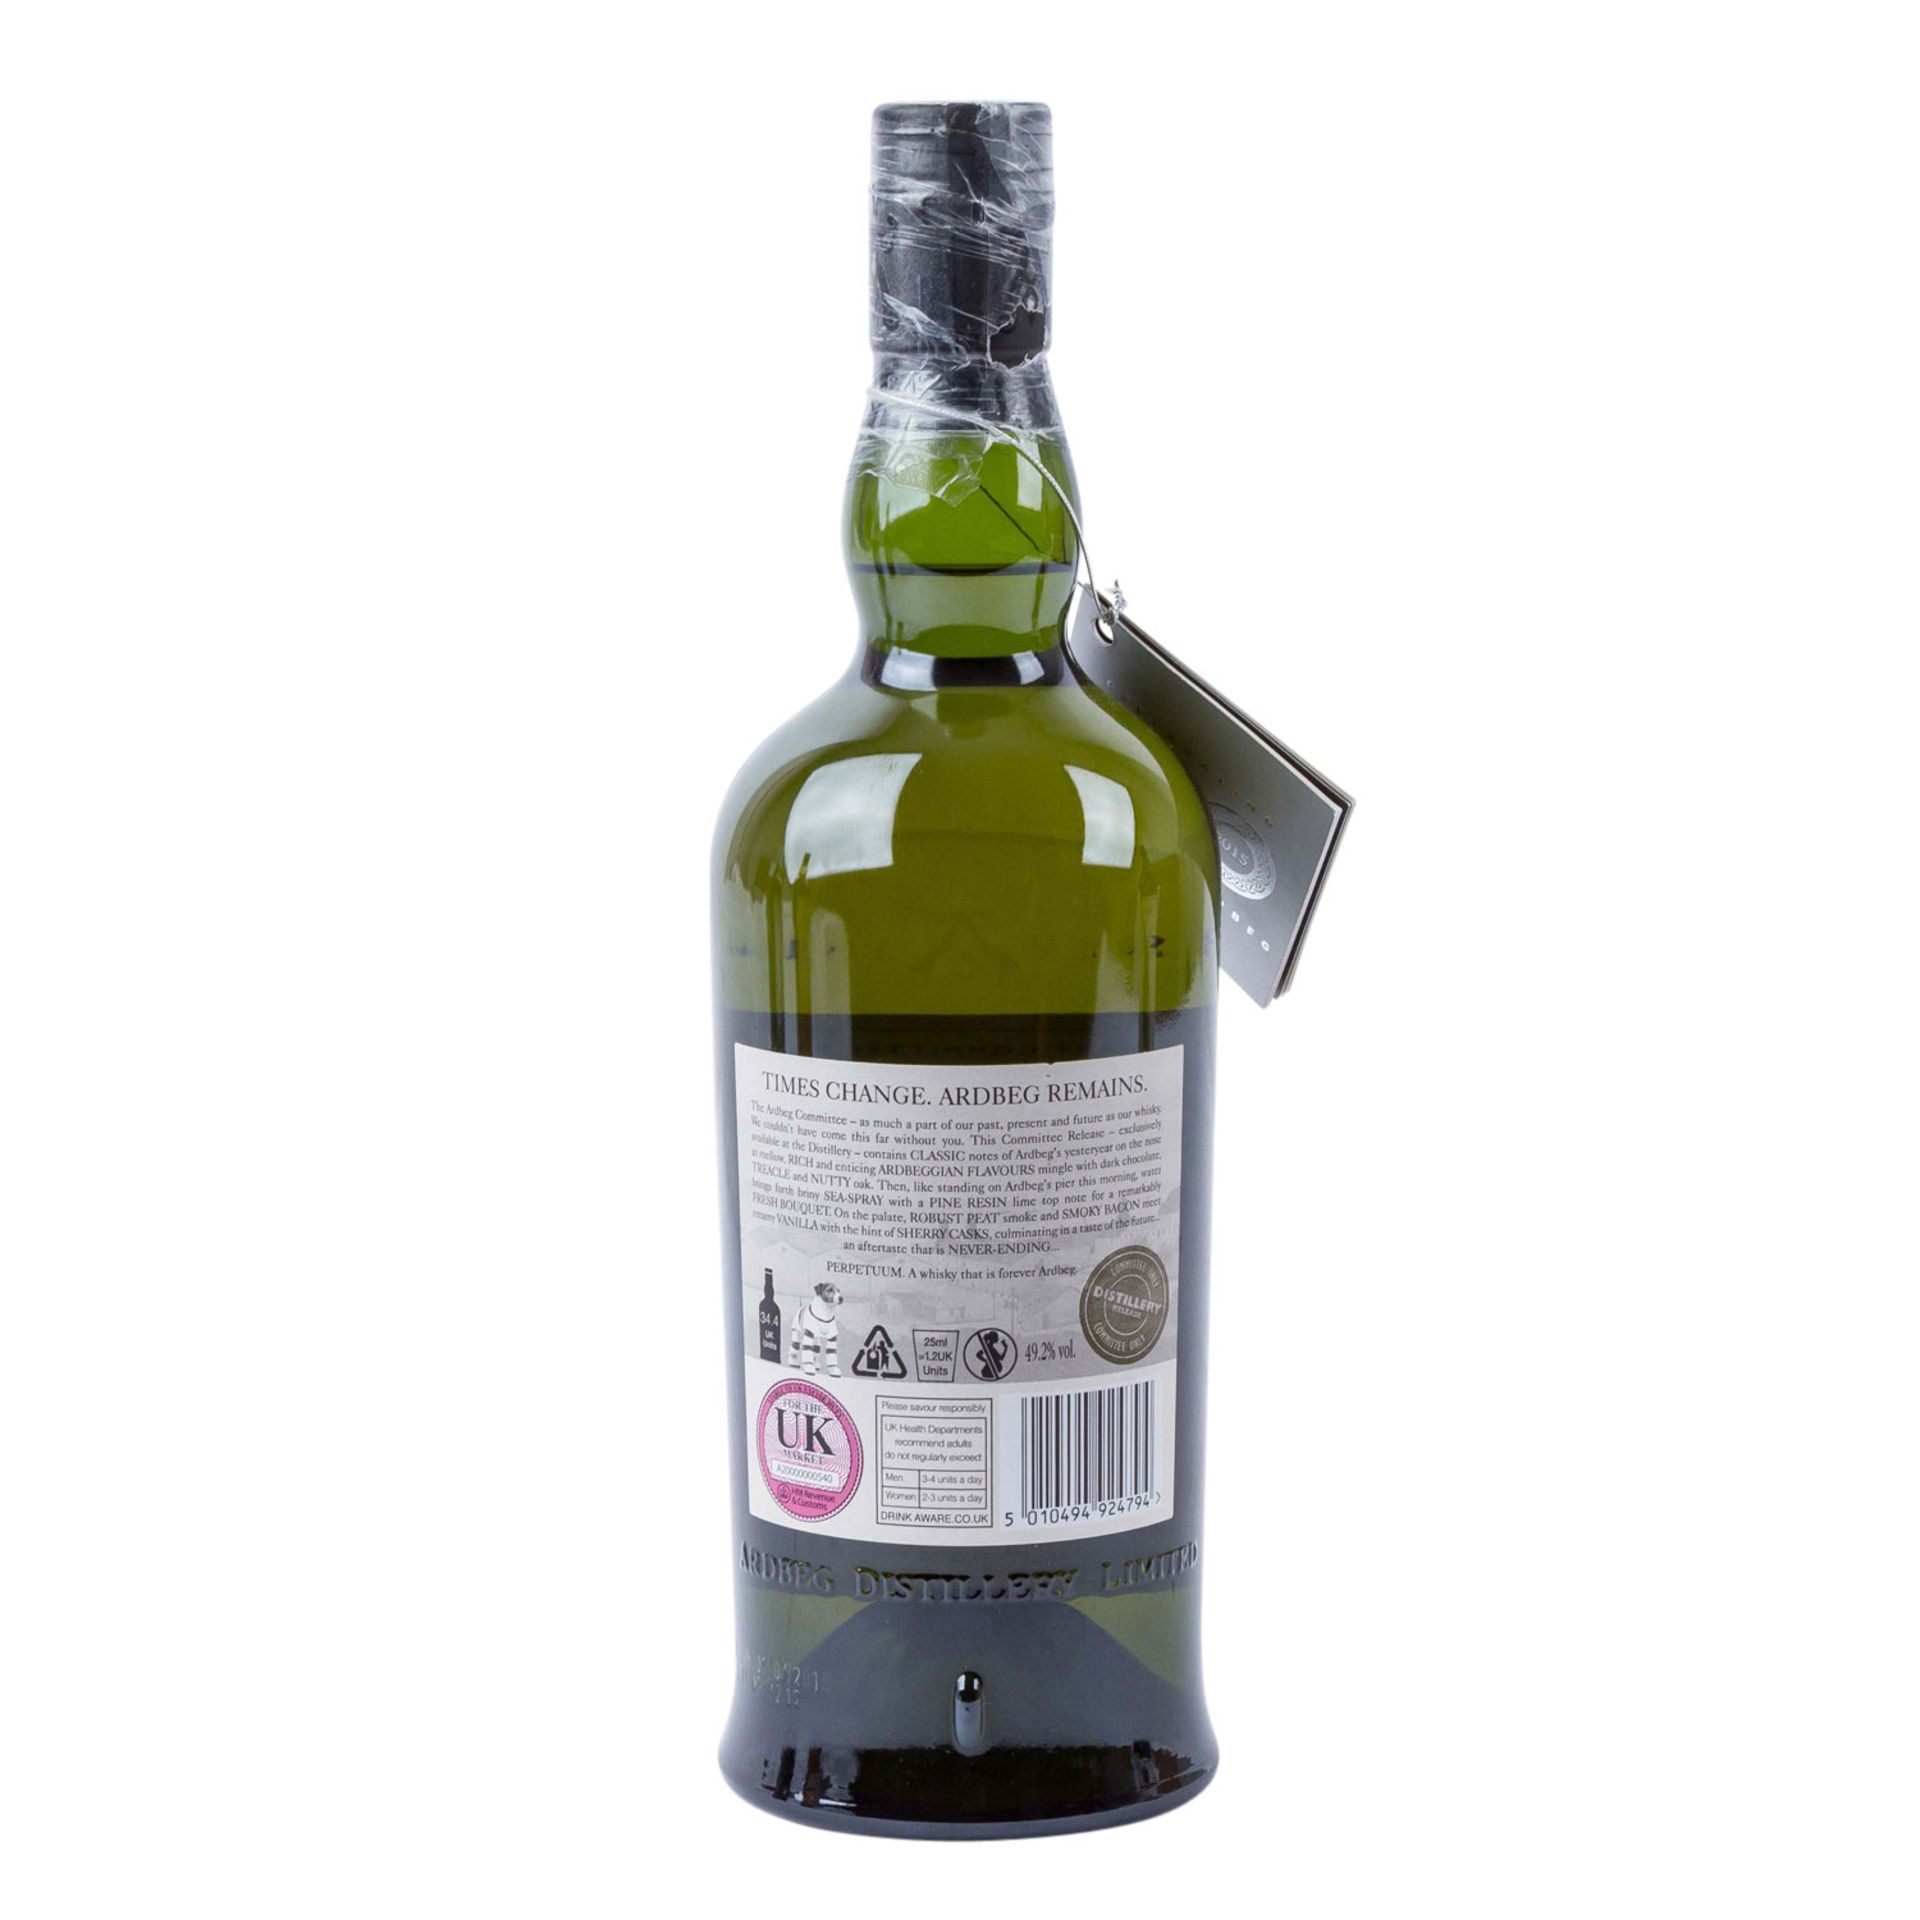 ARDBEG PERPETUUM DISTILLERY RELEASE Islay Single Malt Scotch Whisky 2015 - Image 2 of 3